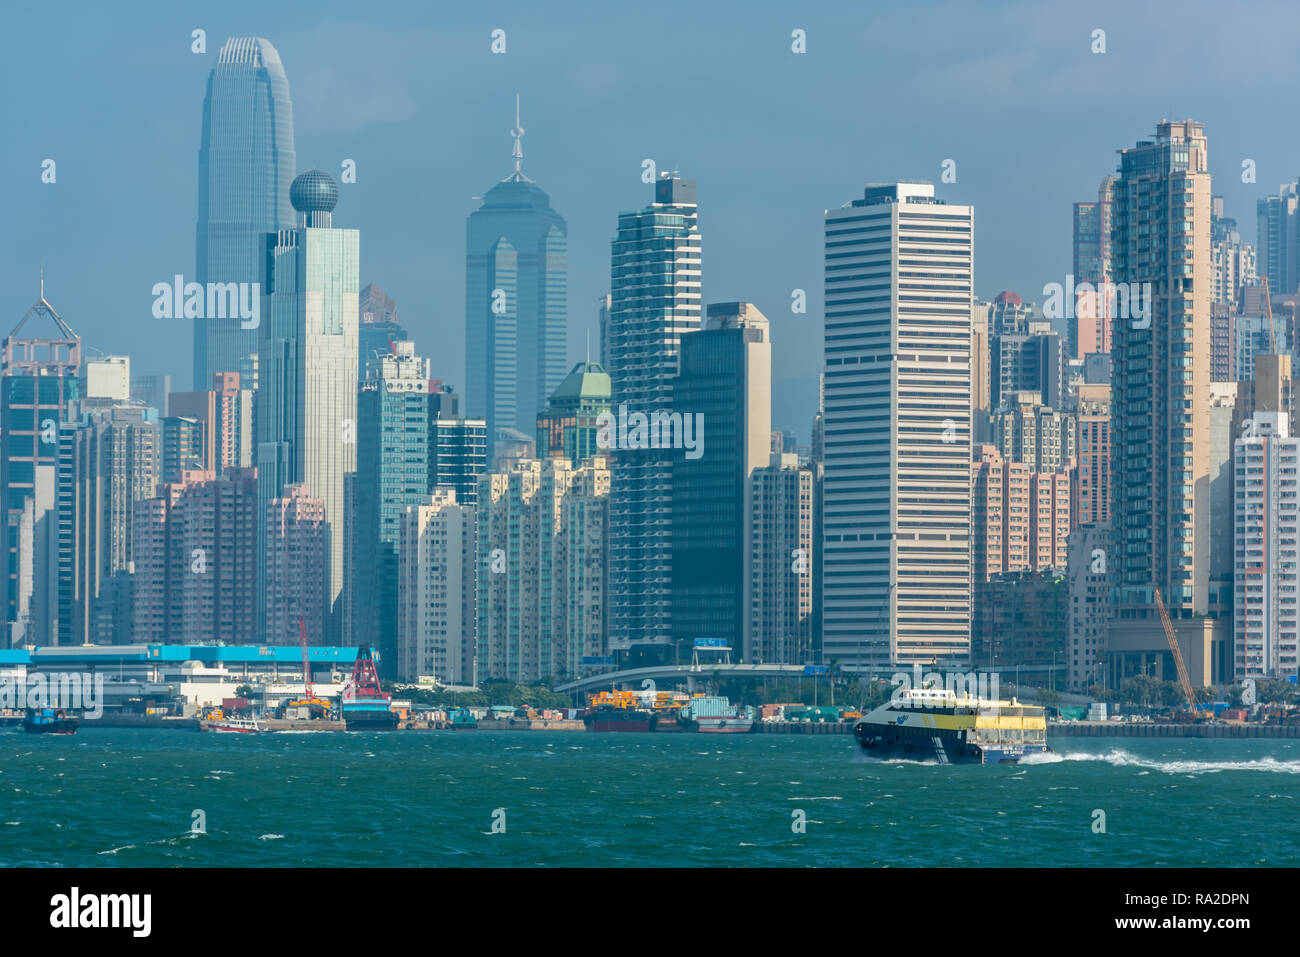 The Hong Kong & Kowloon Ferries catamaran, 'Sea Superior', dwarfed by the skyscrapers of Sai Wan, Sai Ying Pun and Central districts on Hong Kong Stock Photo